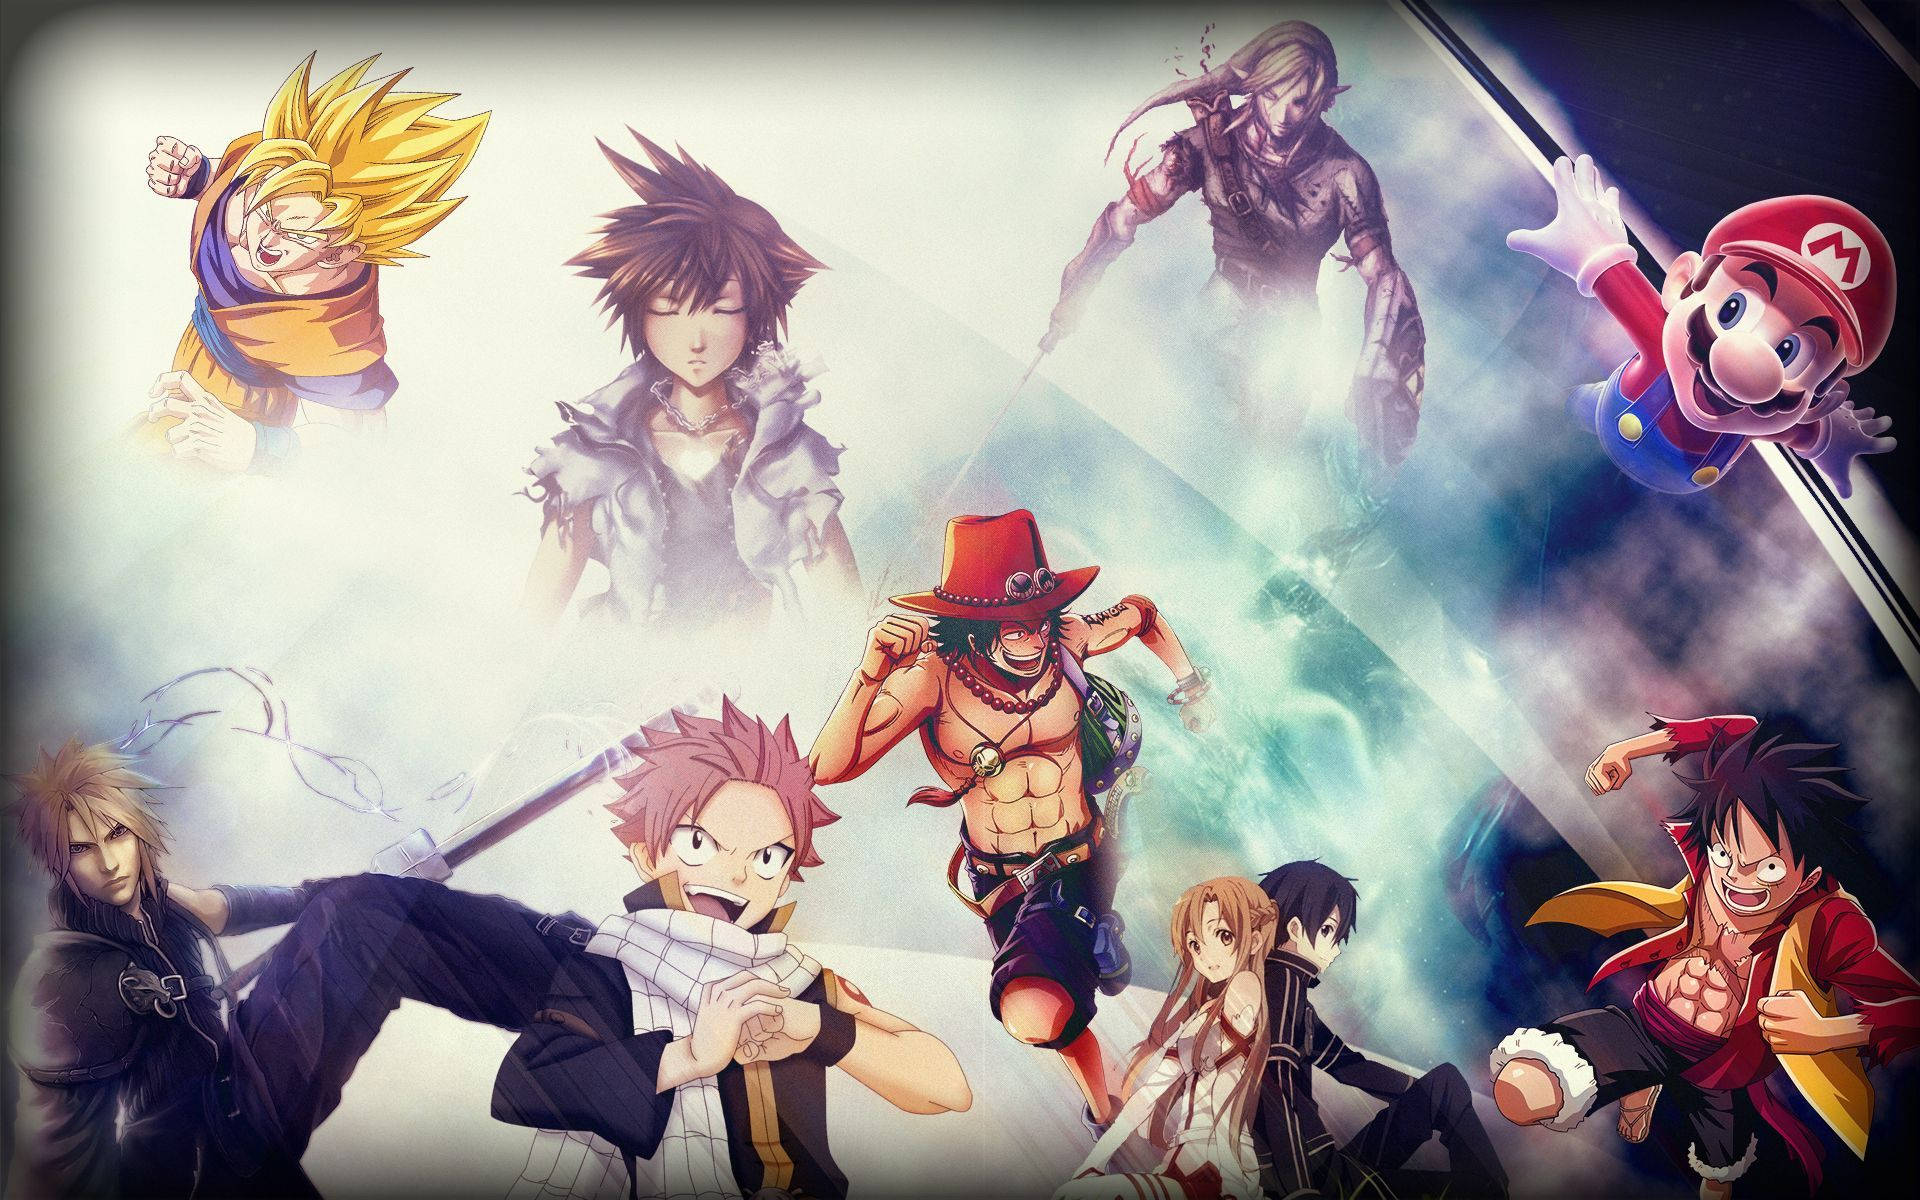 Steigeredein Anime-gaming-erlebnis! Wallpaper